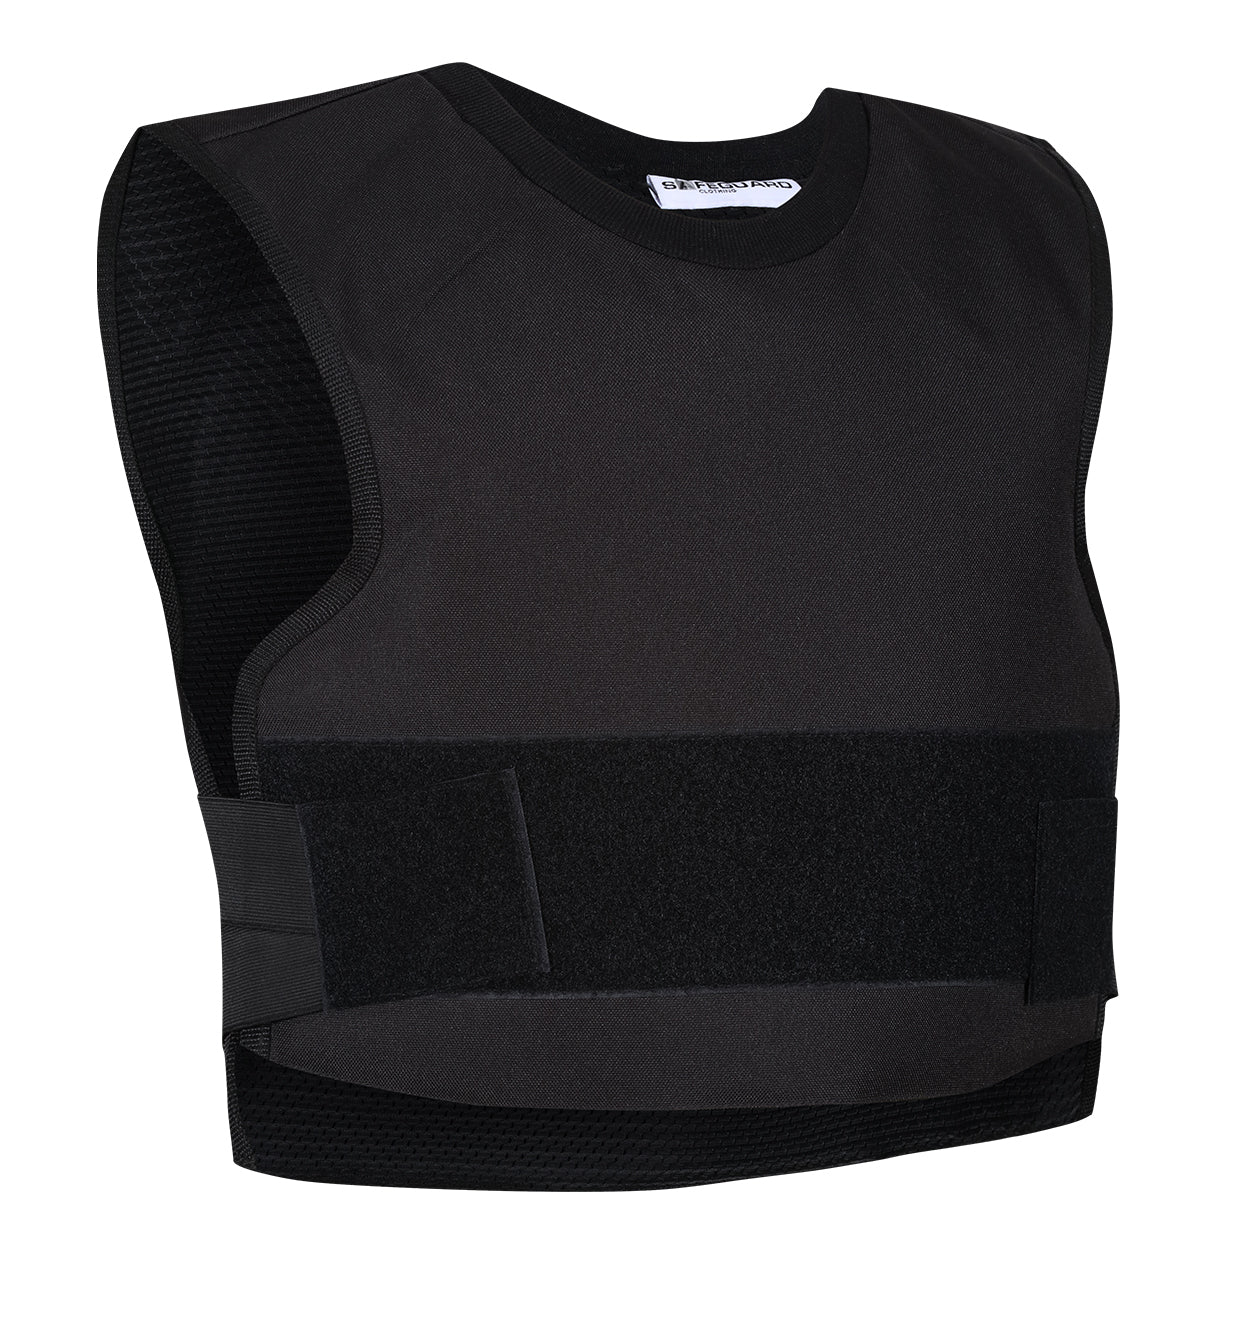 Fake ballistic vests become dangerous fashion trend